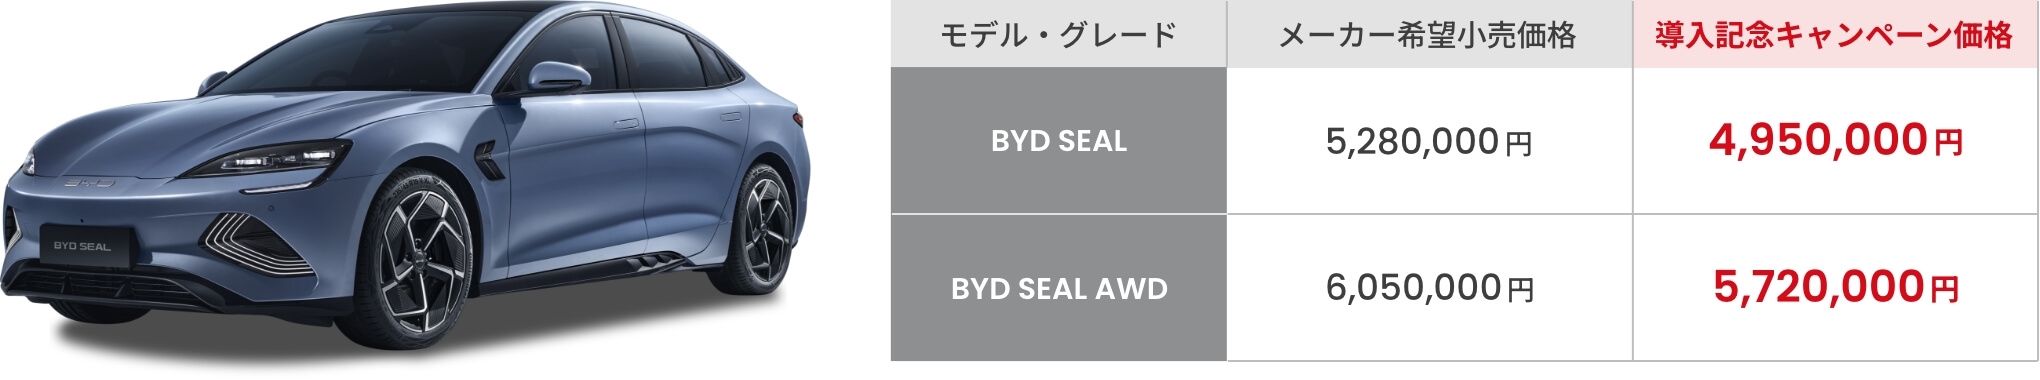 BYD SEAL メーカー希望小売価格5,280,000円のところ、導入記念キャンペーン価格4,950,000円 / BYD SEAL AWD メーカー希望小売価格6,050,000円のところ、導入記念キャンペーン価格5,720,000円